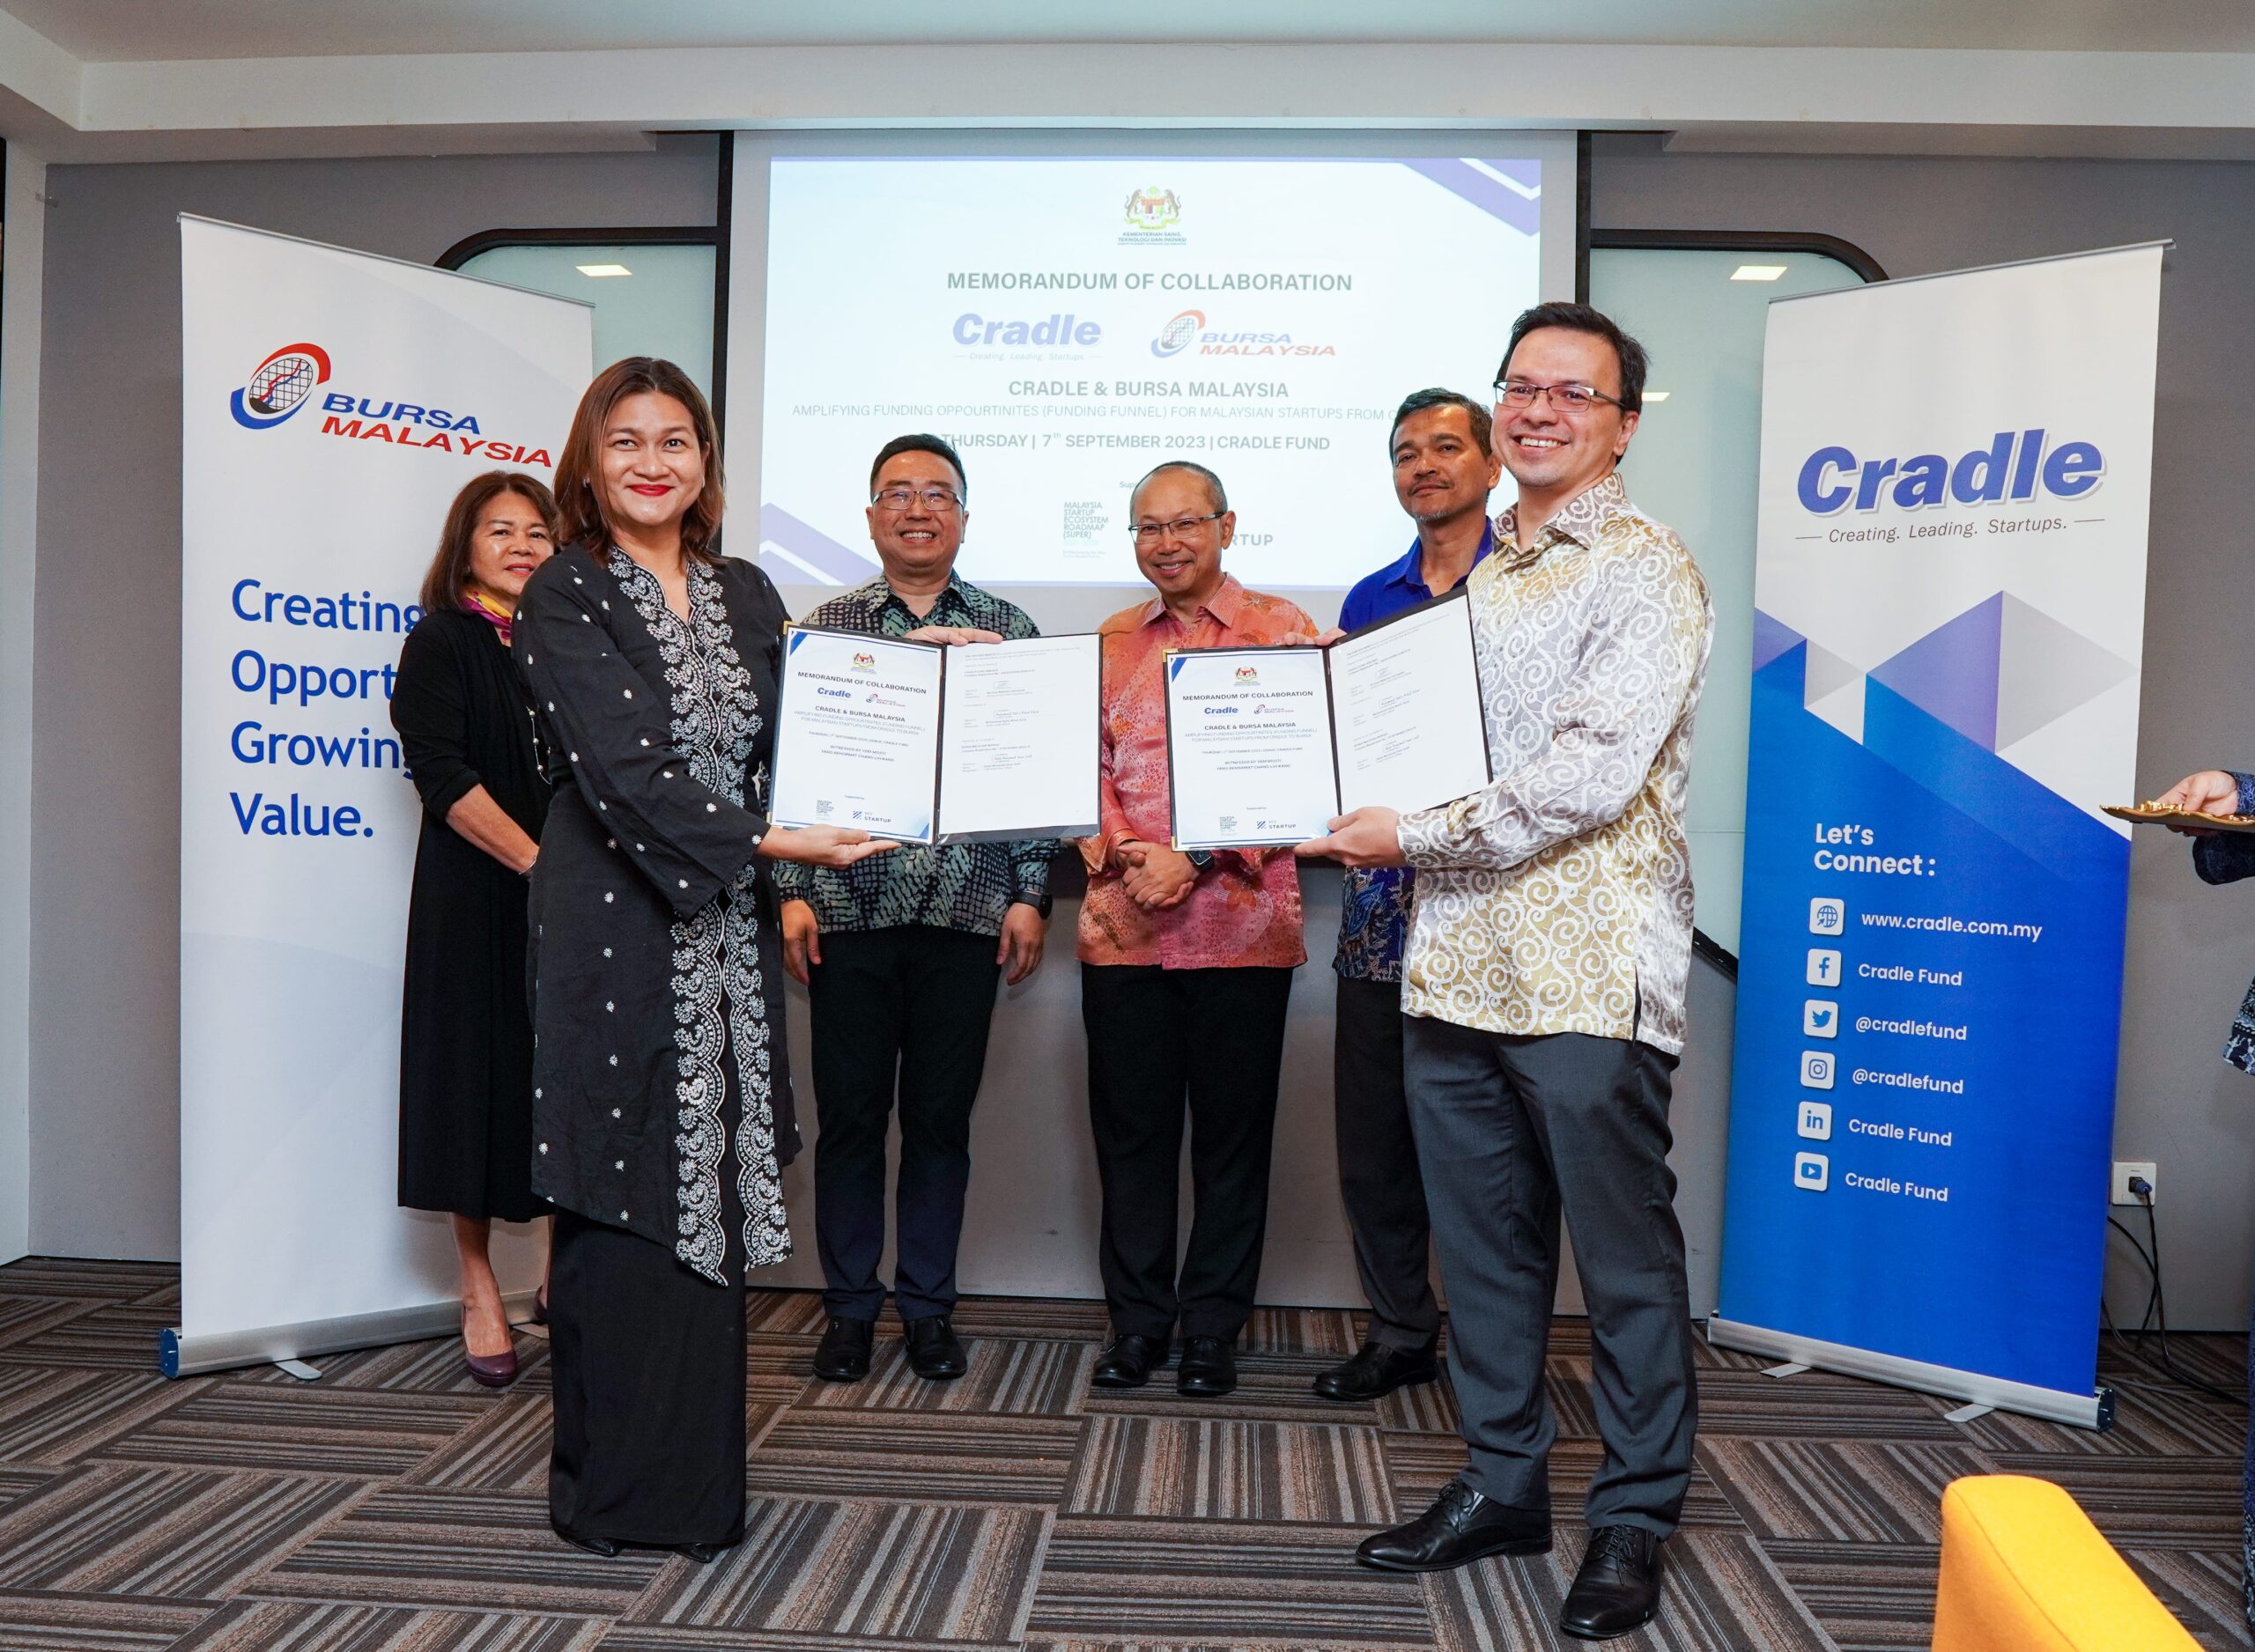 Cradle and bursa malaysia collaborate to  facilitate listing of local startups in bursa malaysia